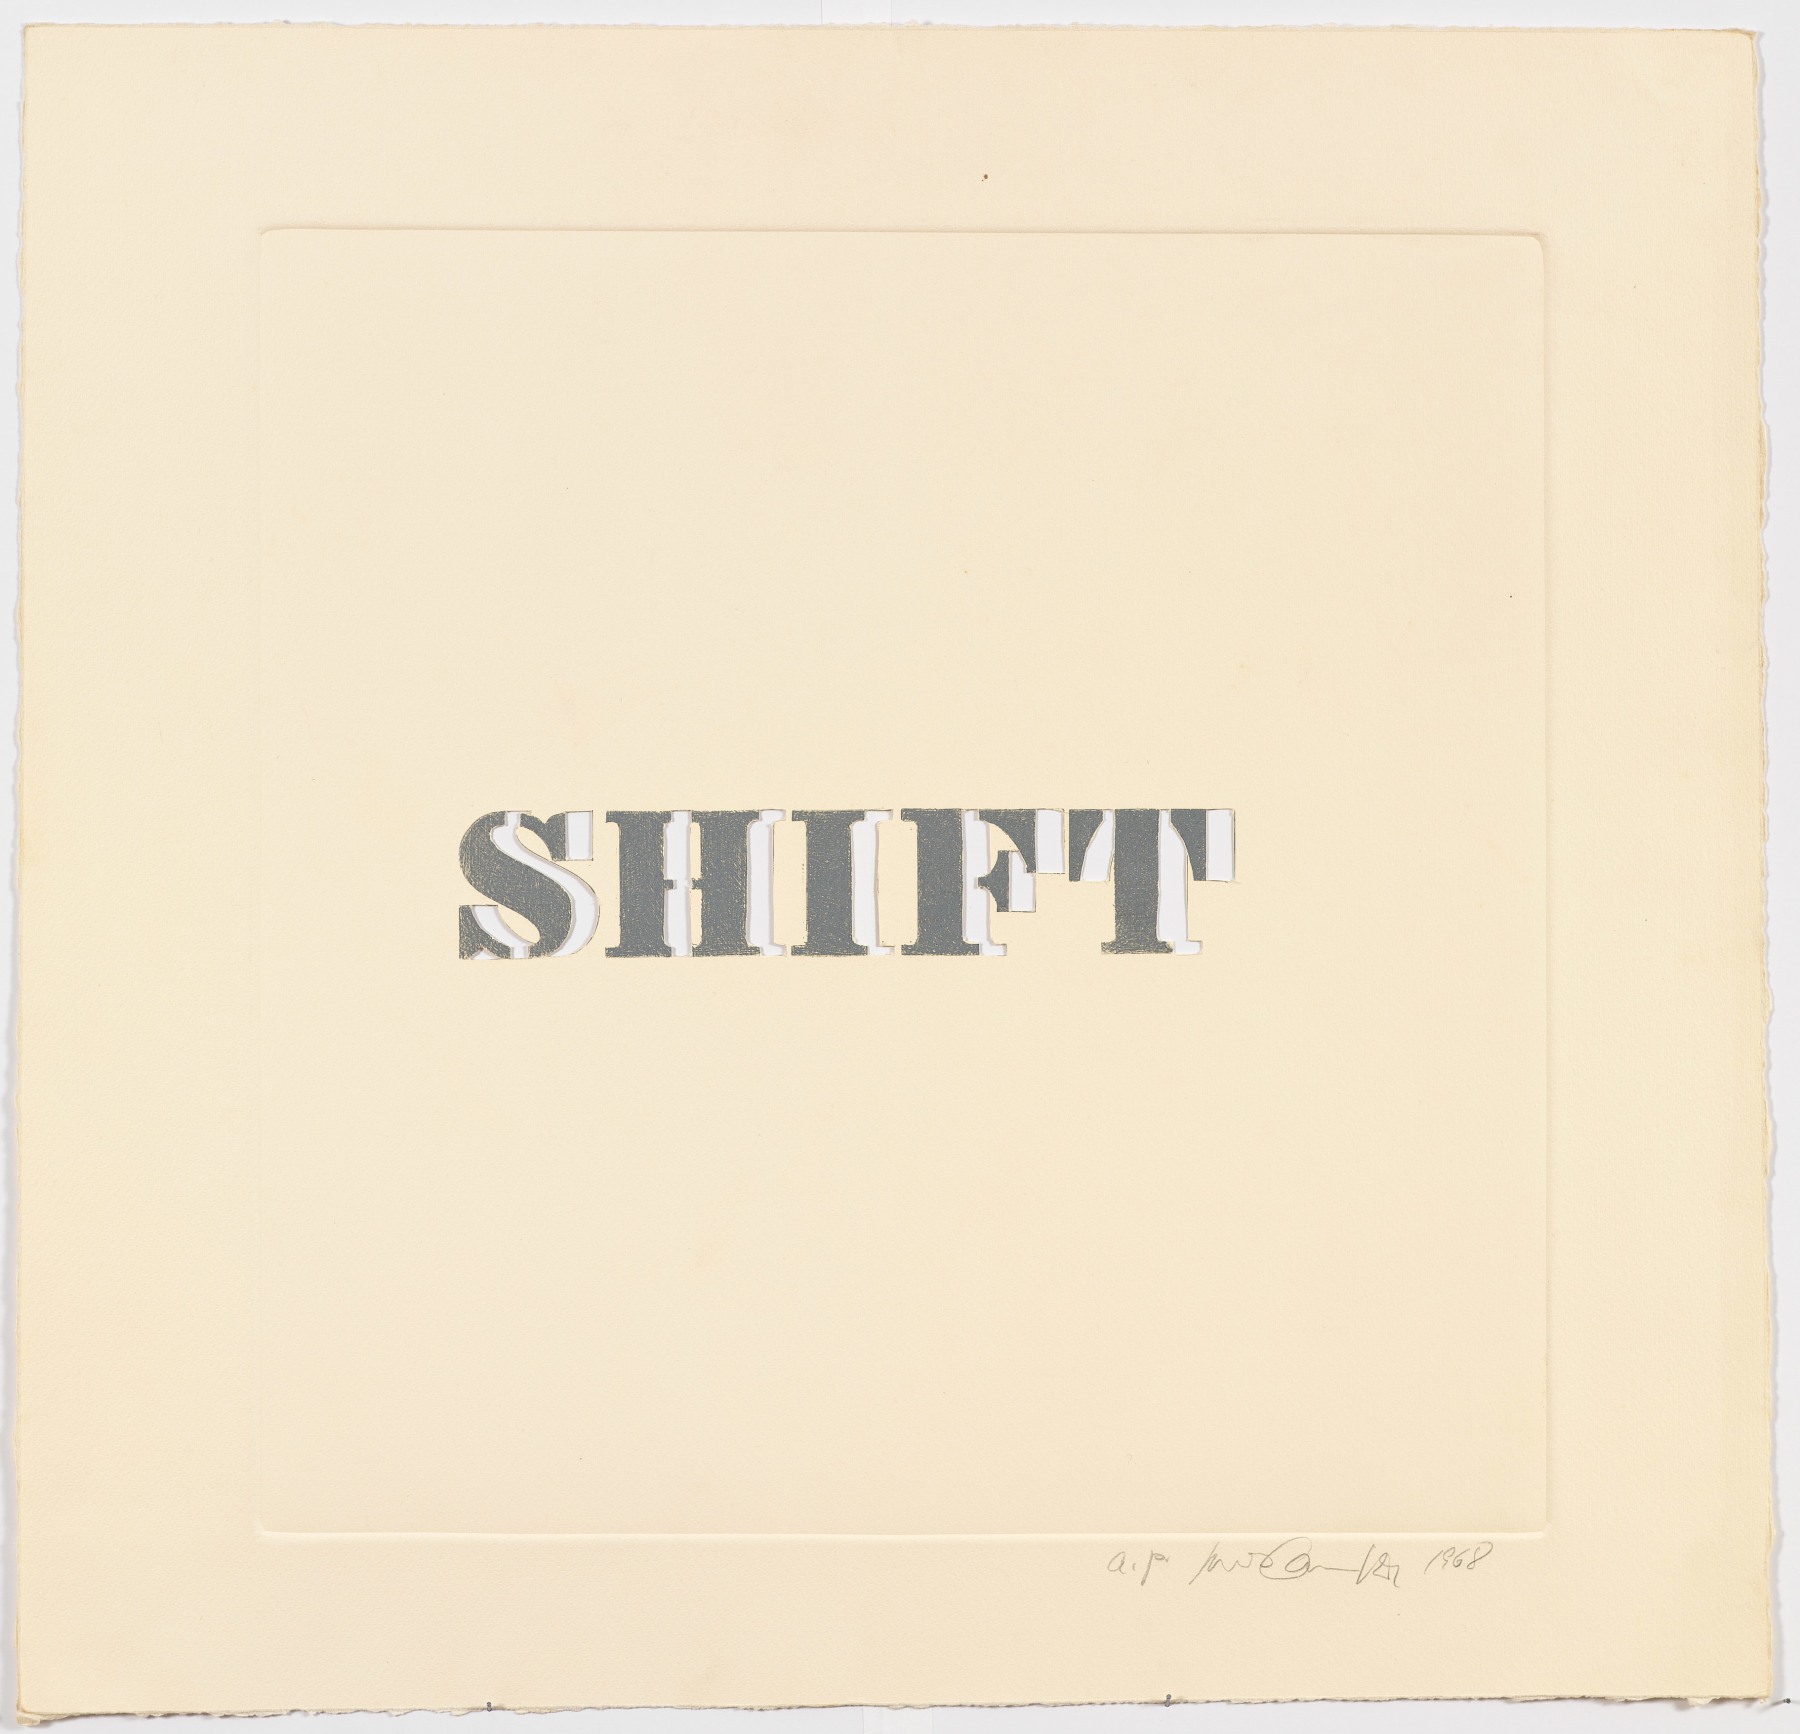 Luis Camnitzer, Shift, 1968